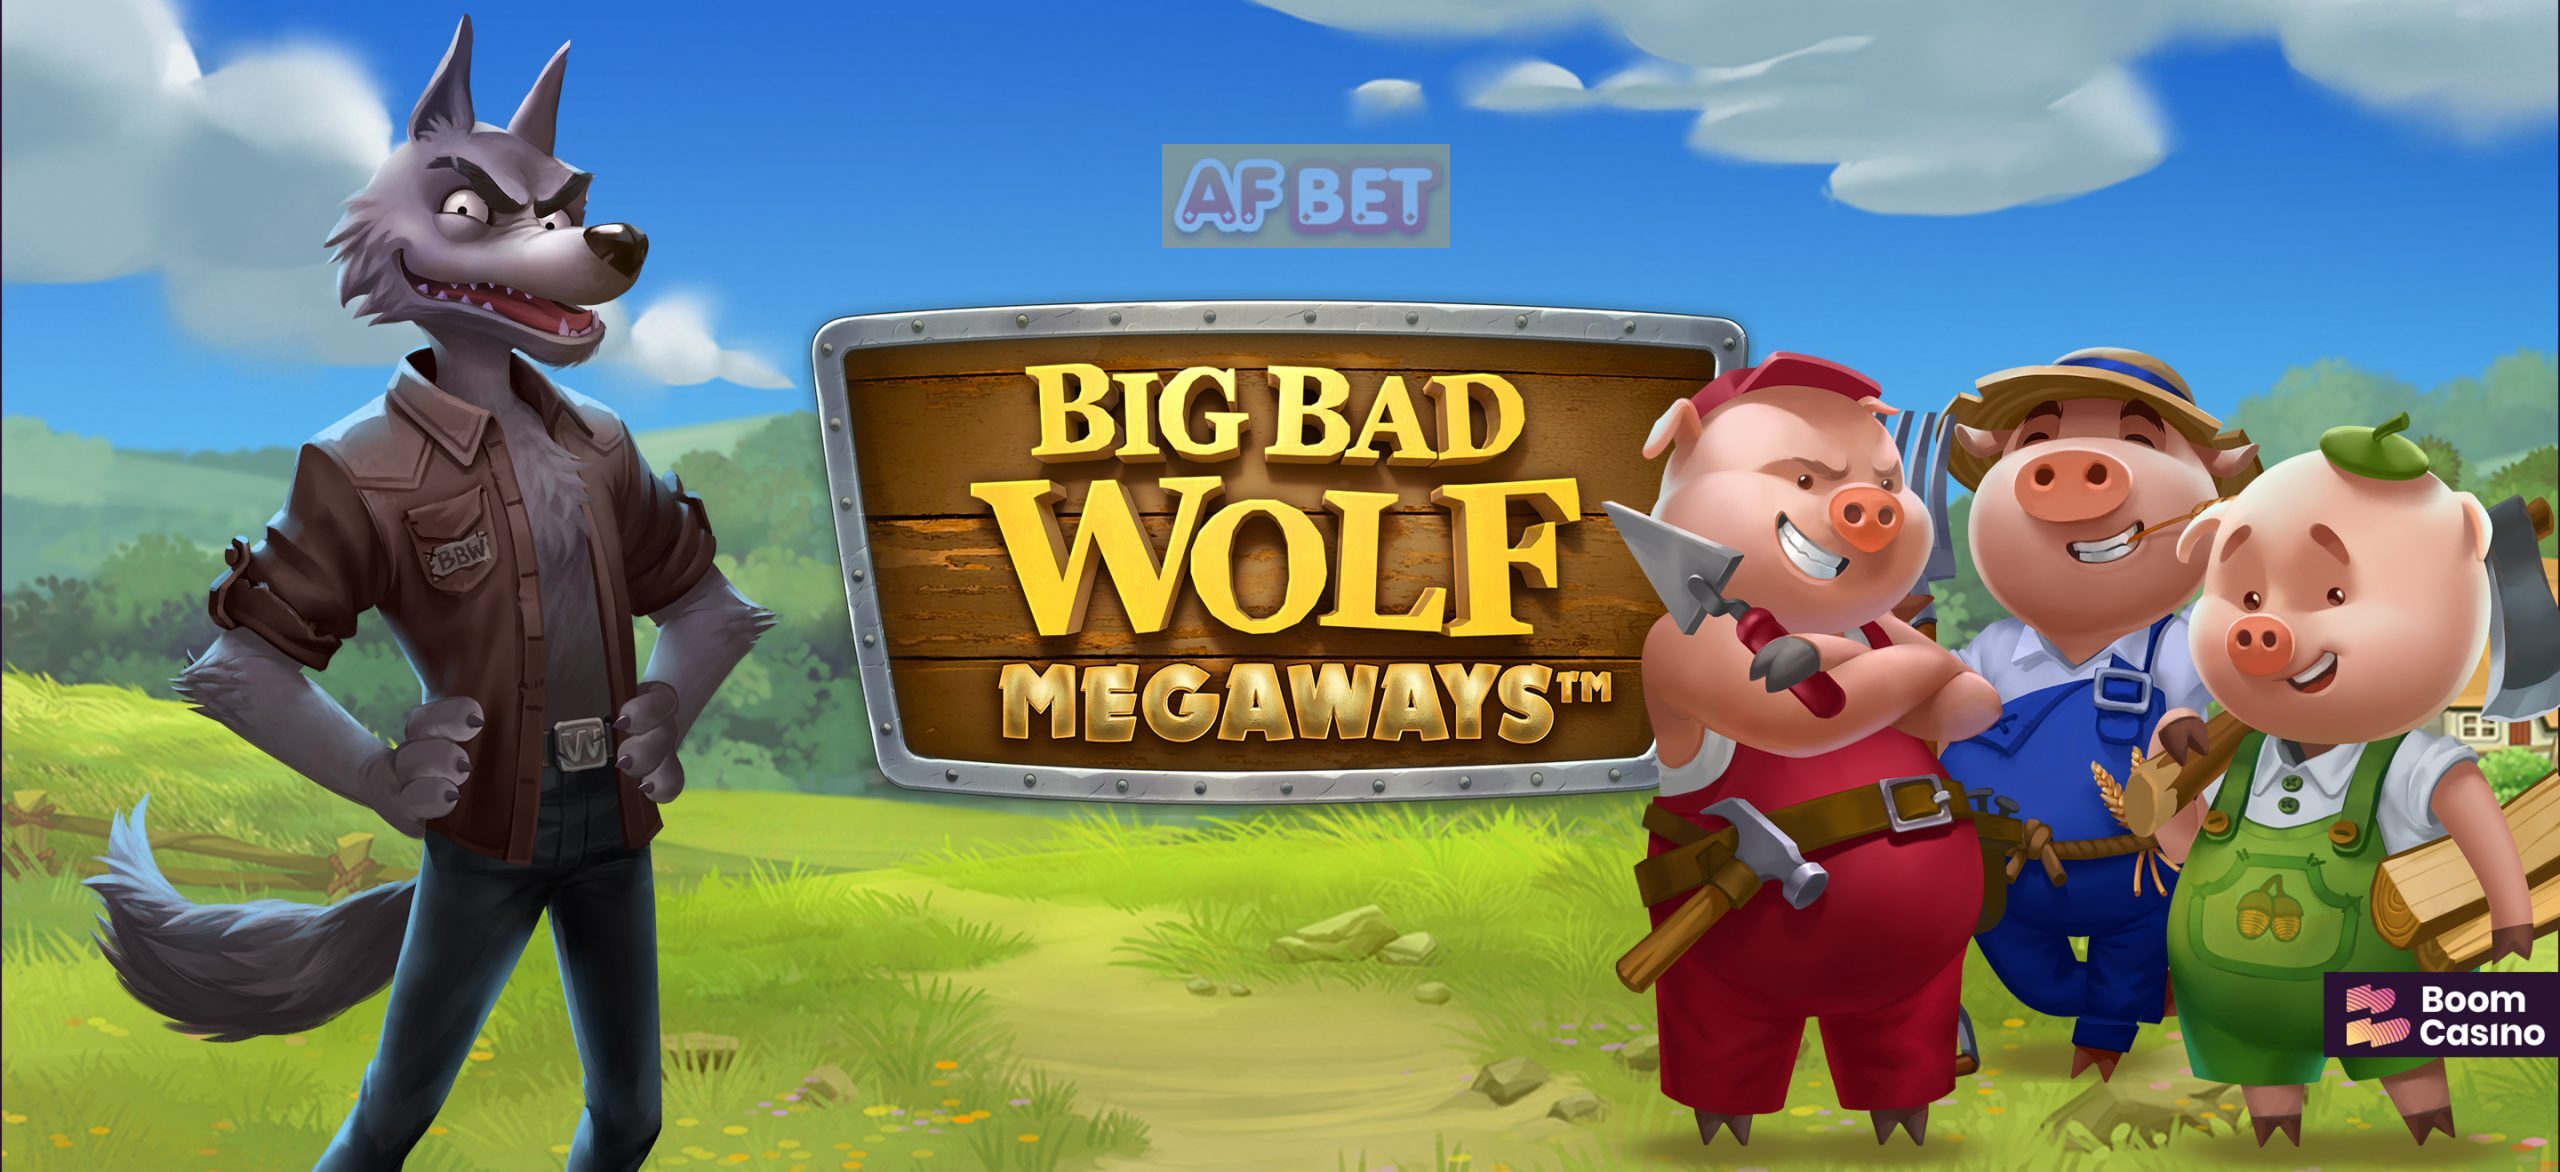 BIG BAD WOLF MEGAWAYS